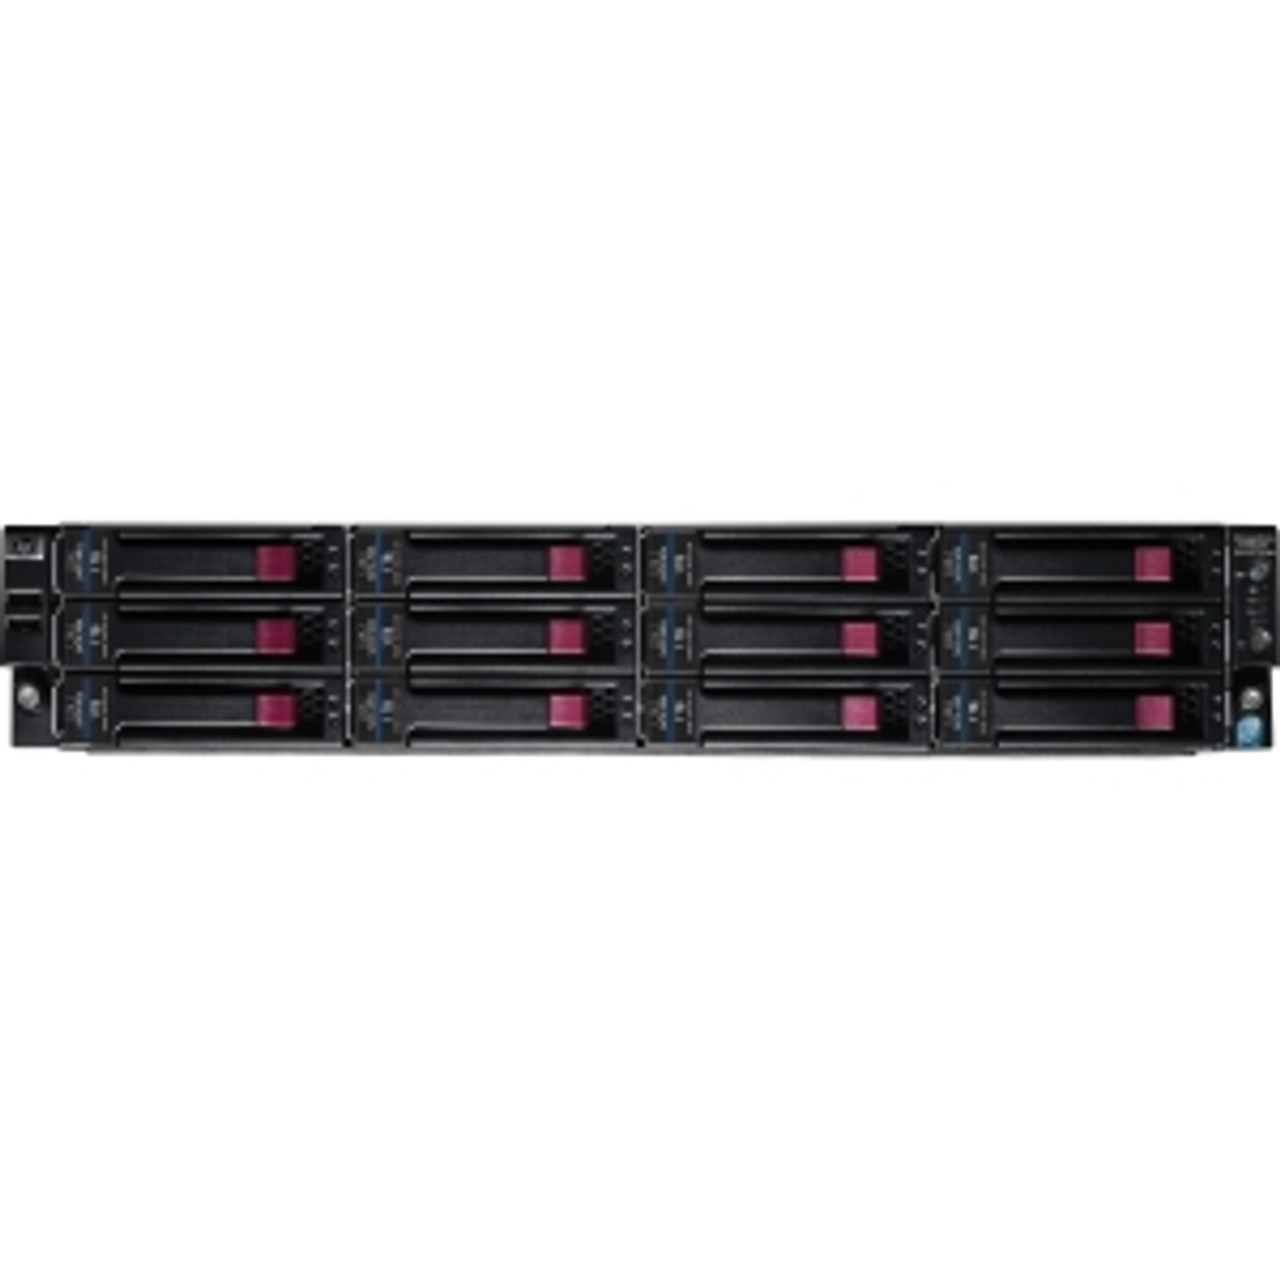 BV861A - HP StorageWorks X1600 G2 Network Storage Server 1 x Intel Xeon E5520 2.26 GHz 12.29 TB HDD (6 x 2 TB 2 x 146 GB) 6 GB RAM RAID Supported 6 x USB Ports